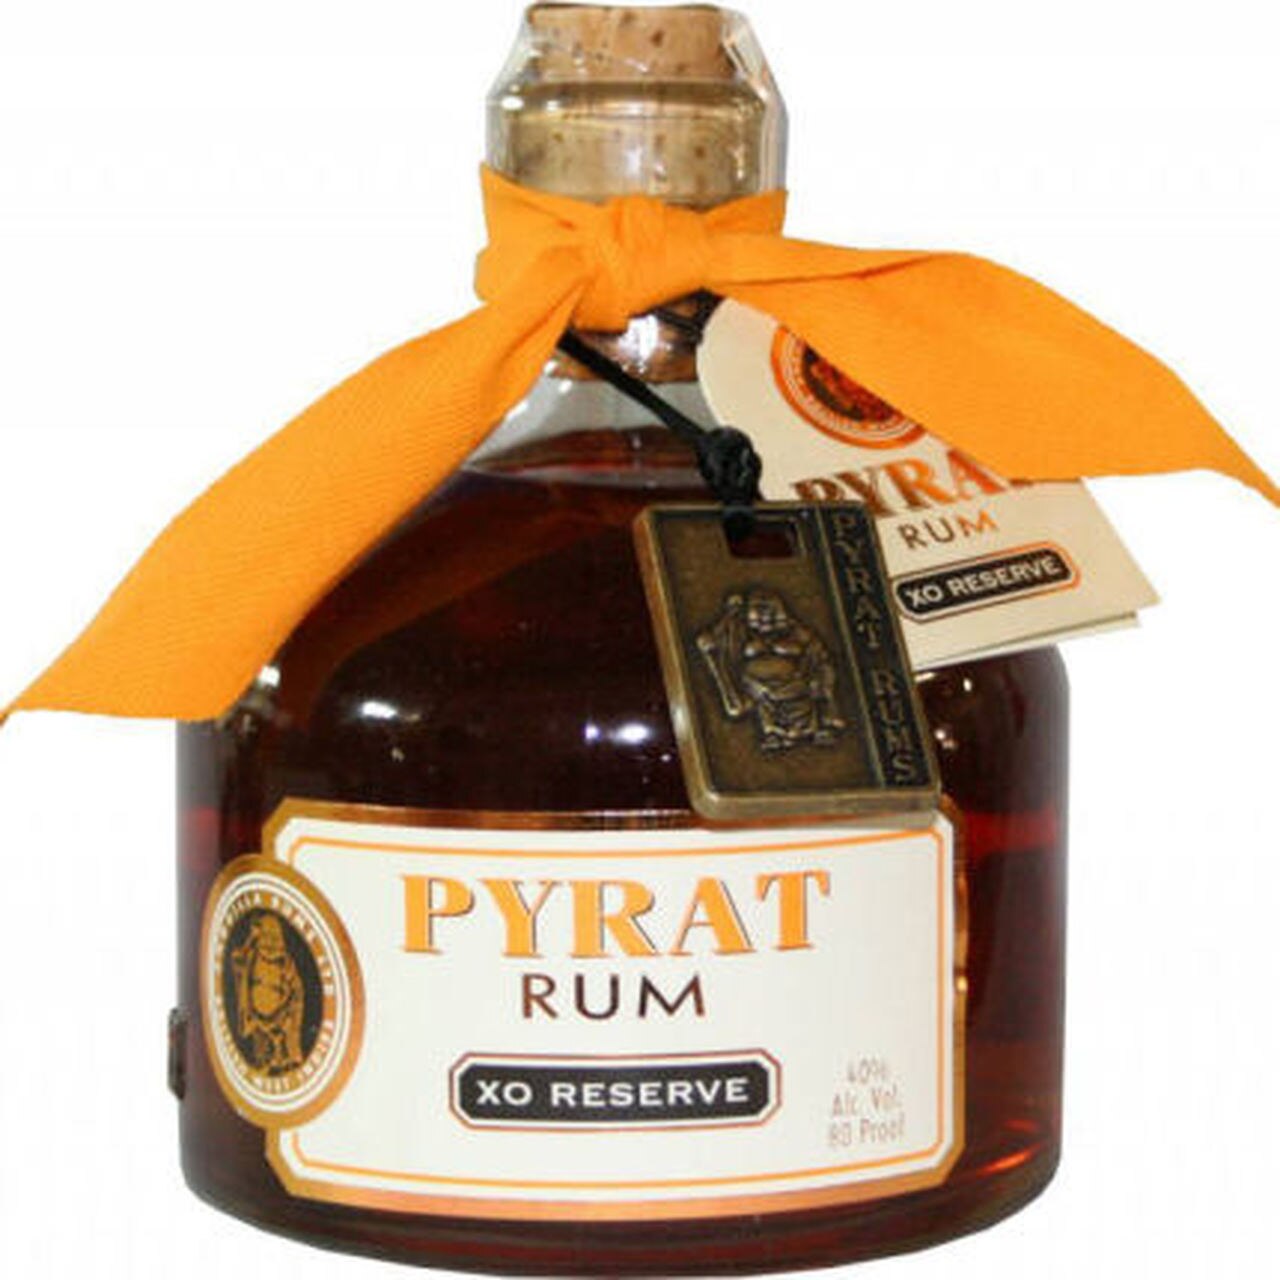 Ri m. Pyrat rum. Pyrat XO. Pyrat XO Reserve. Rum Pyrat XO Reserve.